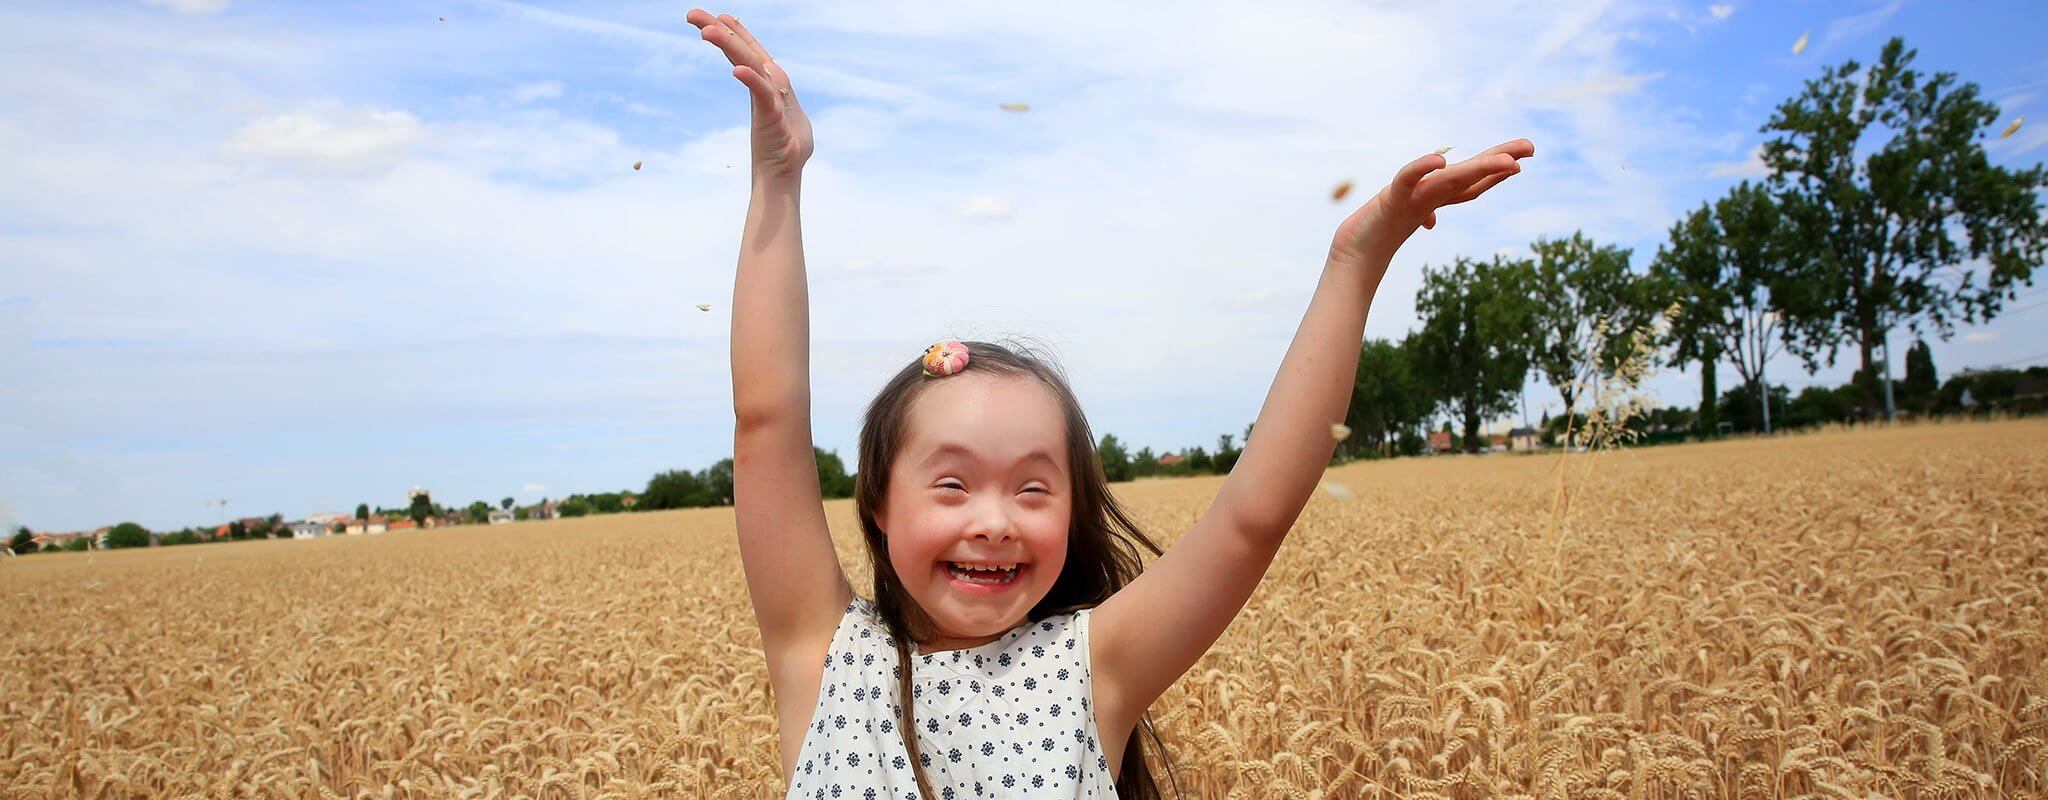 Girl in wheat field Banner image for Gwinnett Pediatrics and Adolescent Medicine, Gwinnett Pediatricians